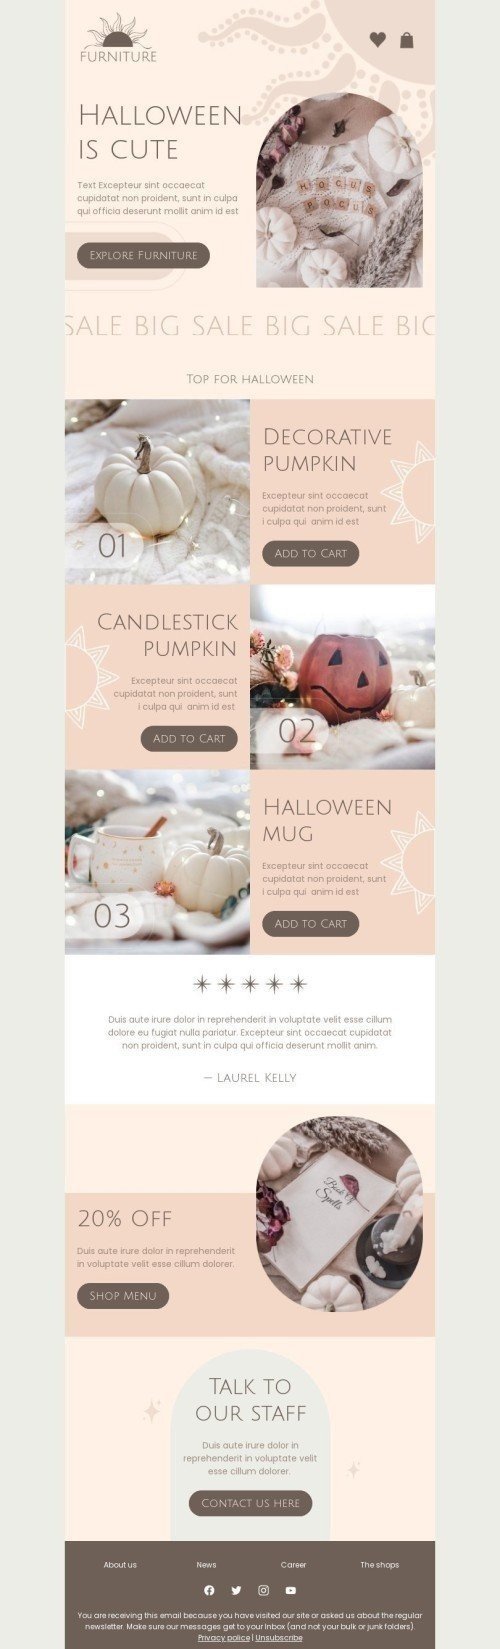 Halloween Email Template "Halloween is cute" for Furniture, Interior & DIY industry desktop view